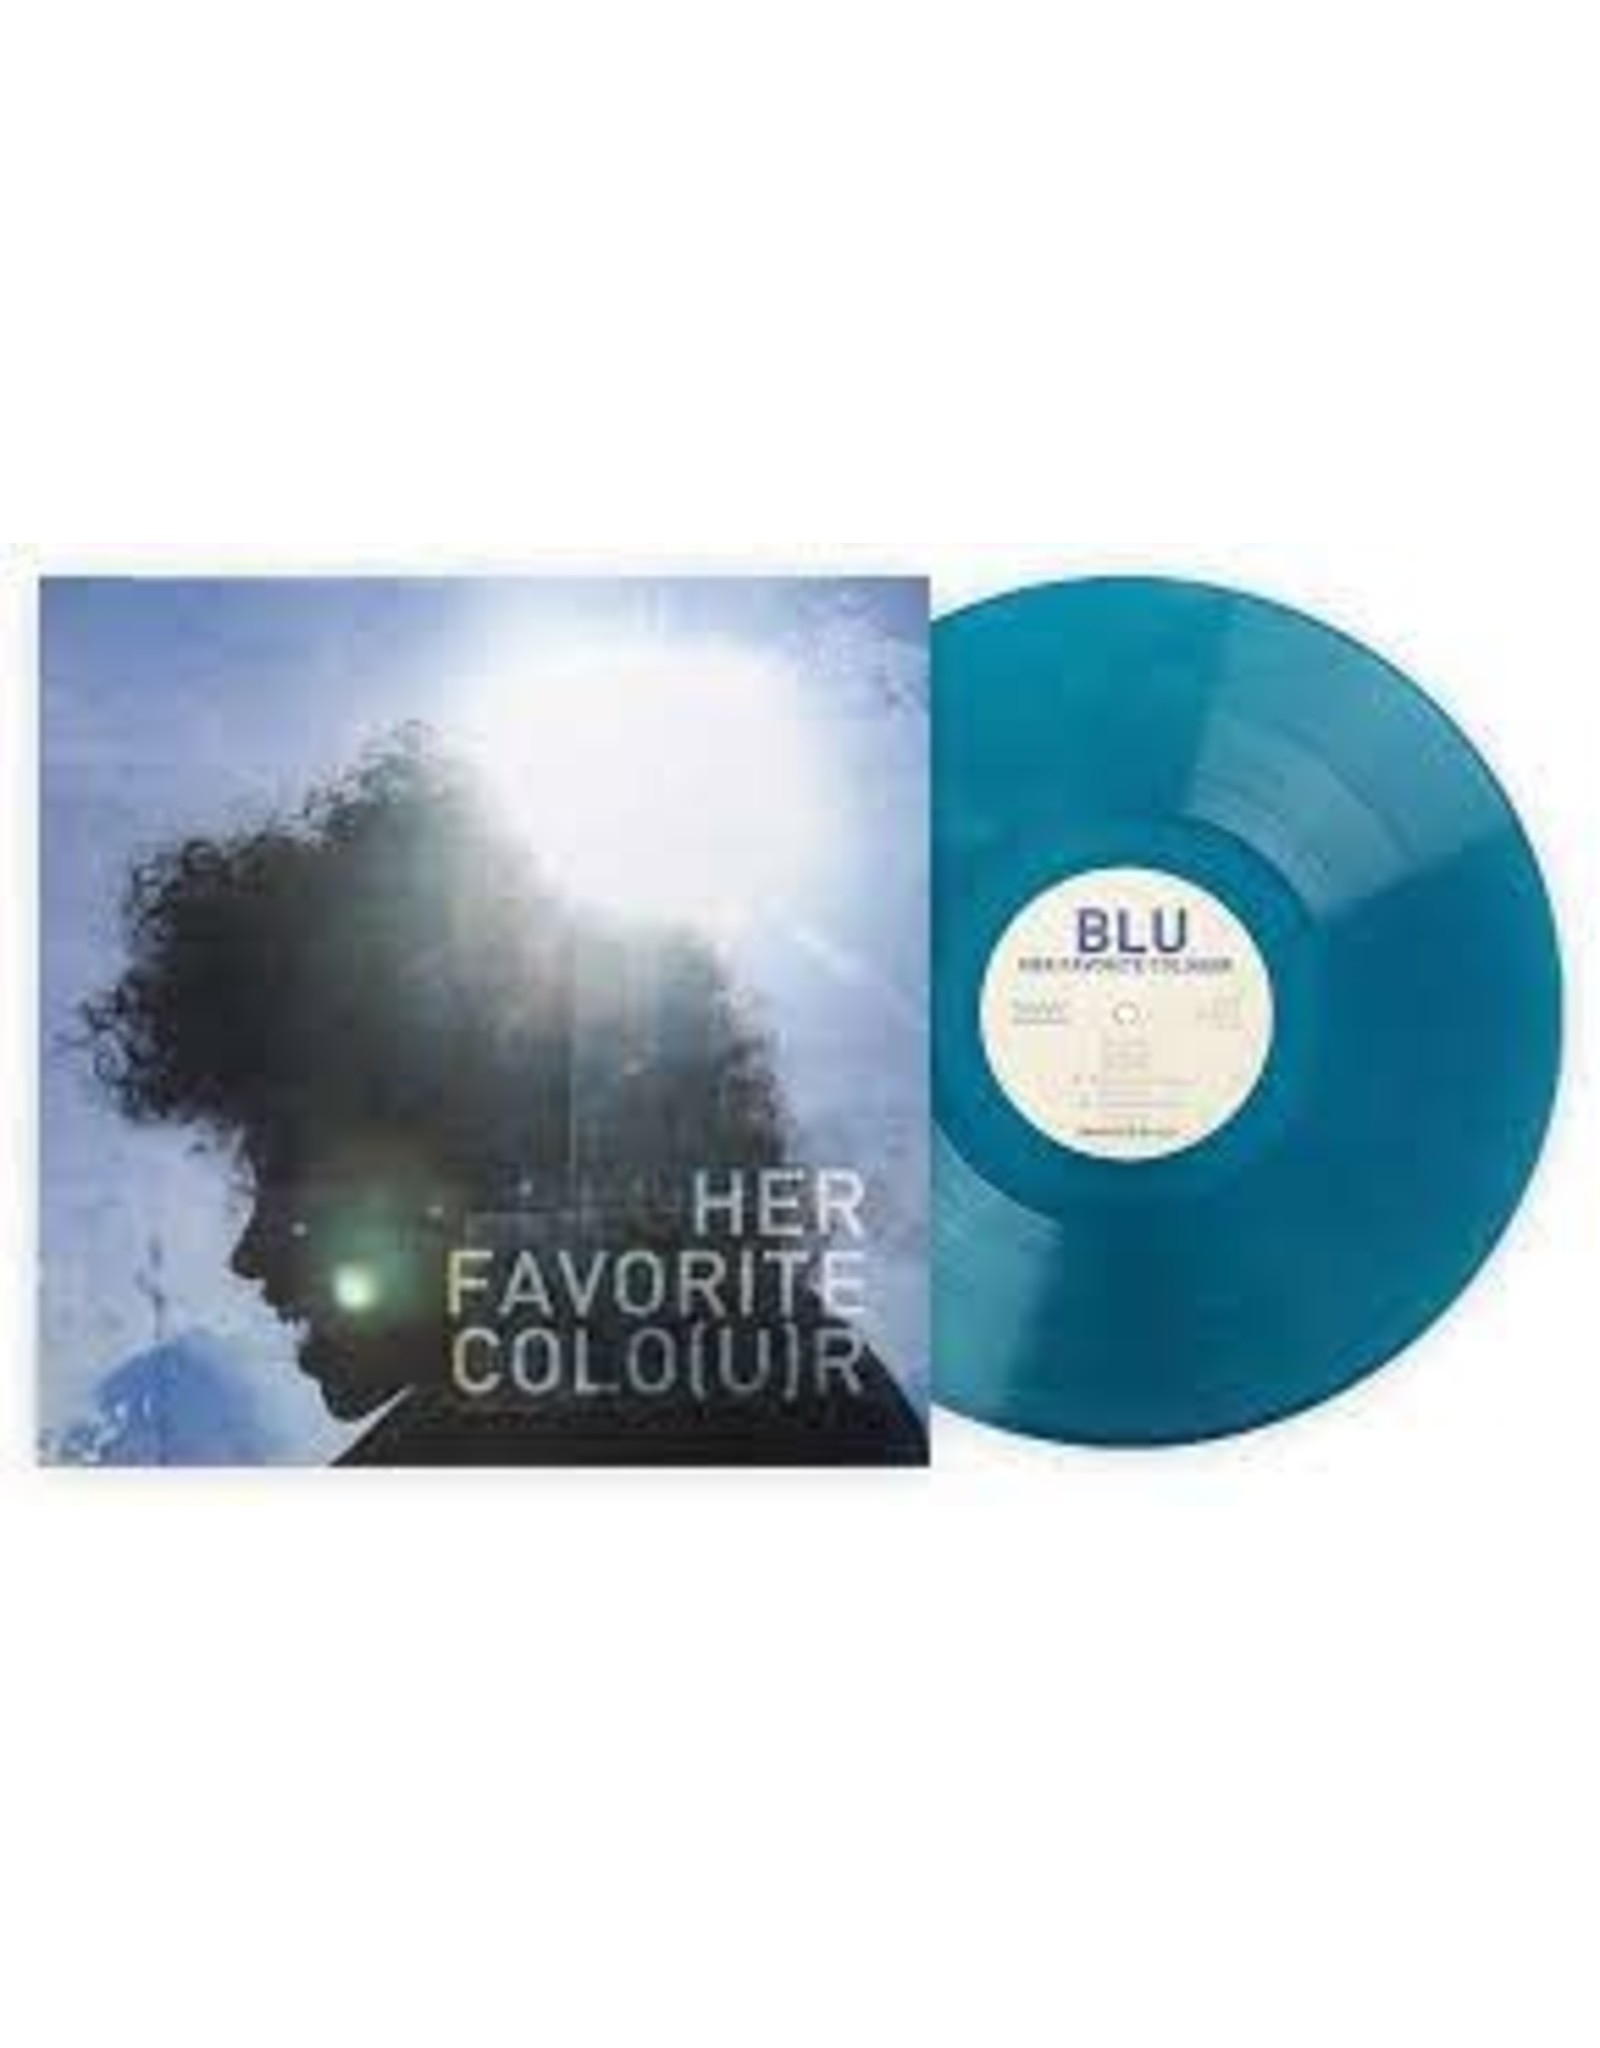 Blu - Her Favorite Colo(u)r LP (Limited Vinyl Me Please Pressing on Aq(u)a Vinyl)